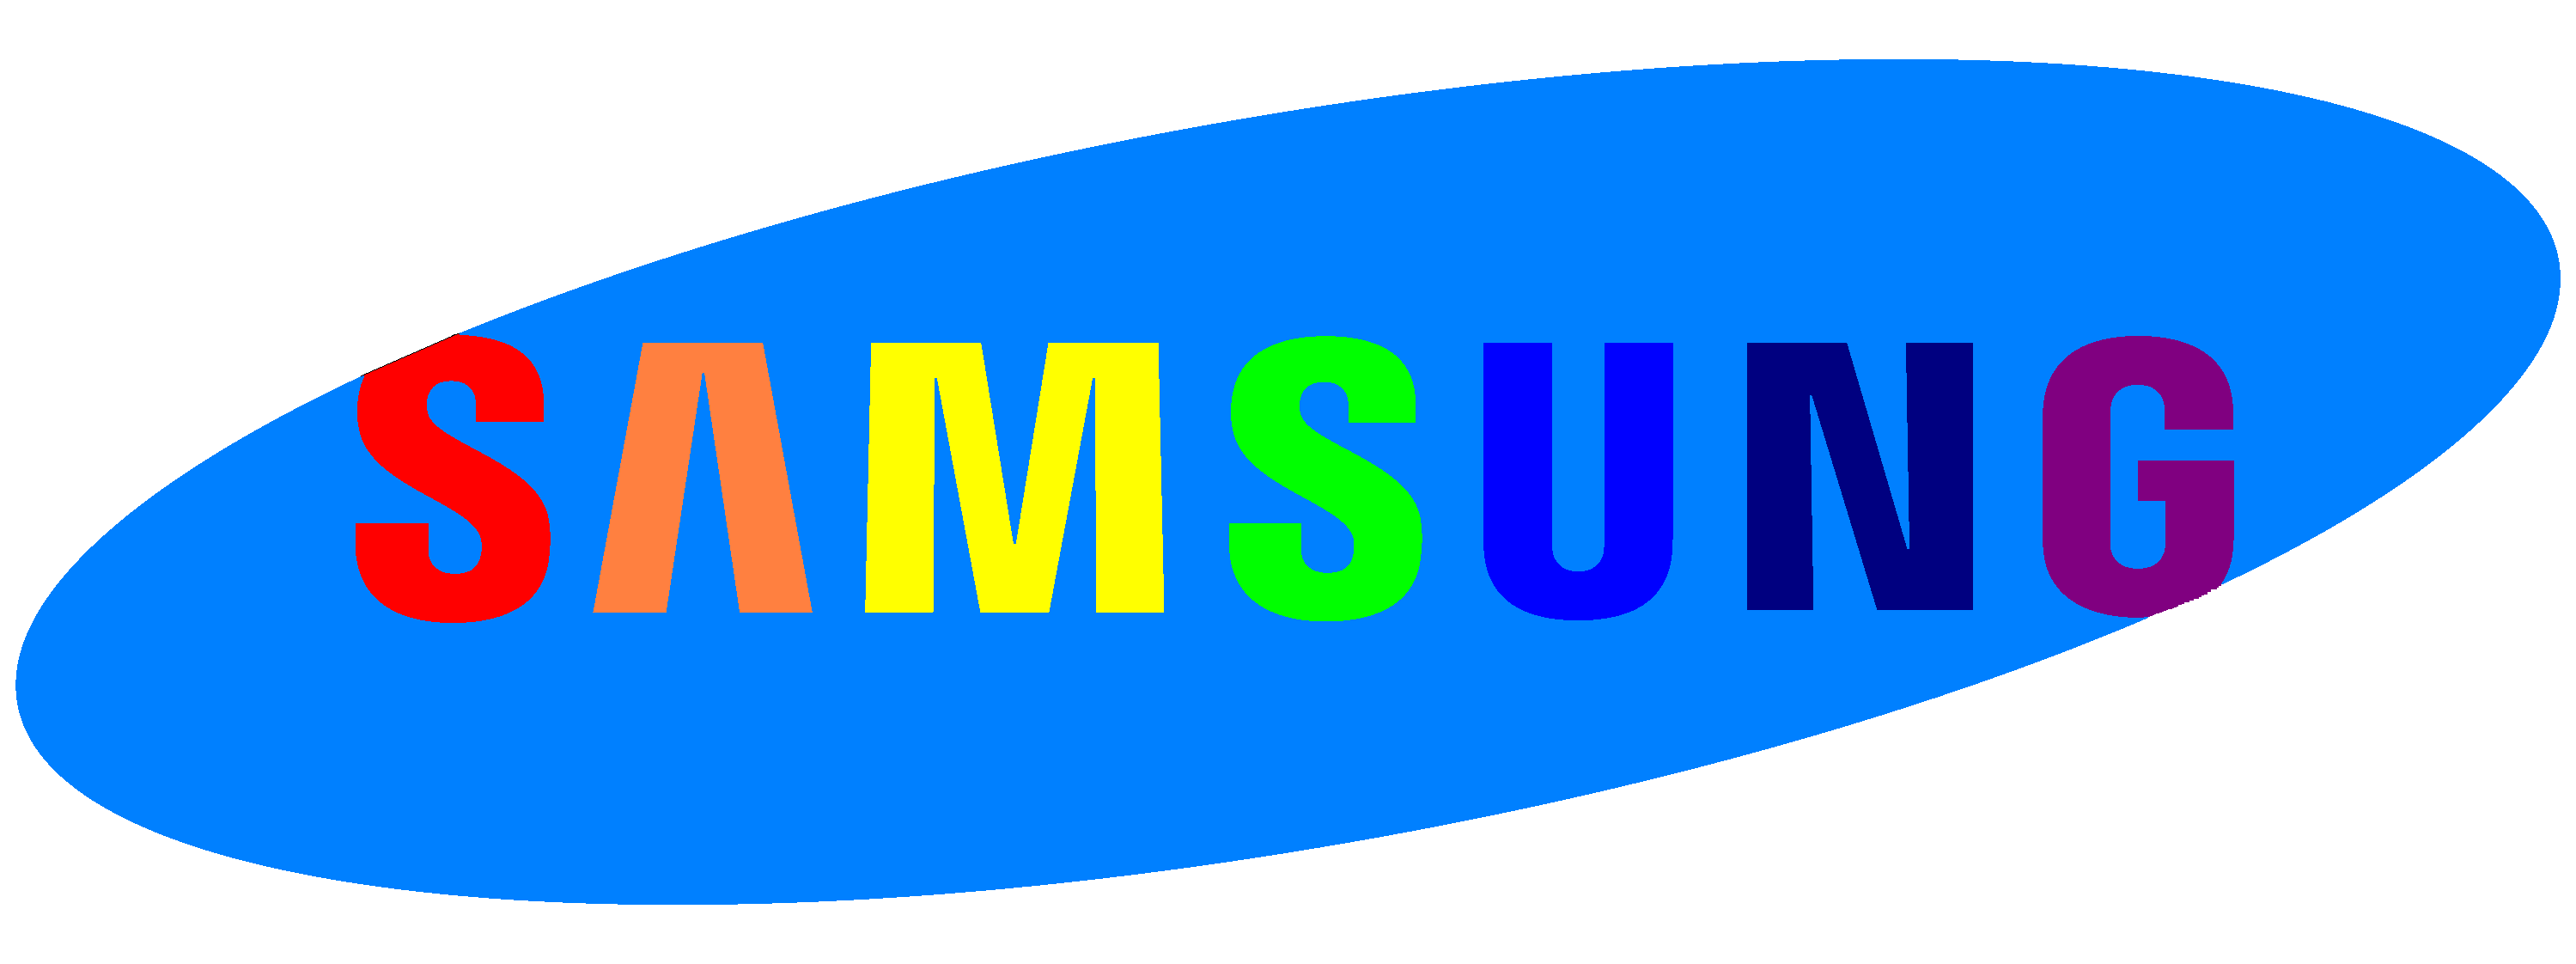 New Samsung Logo - Samsung Logos